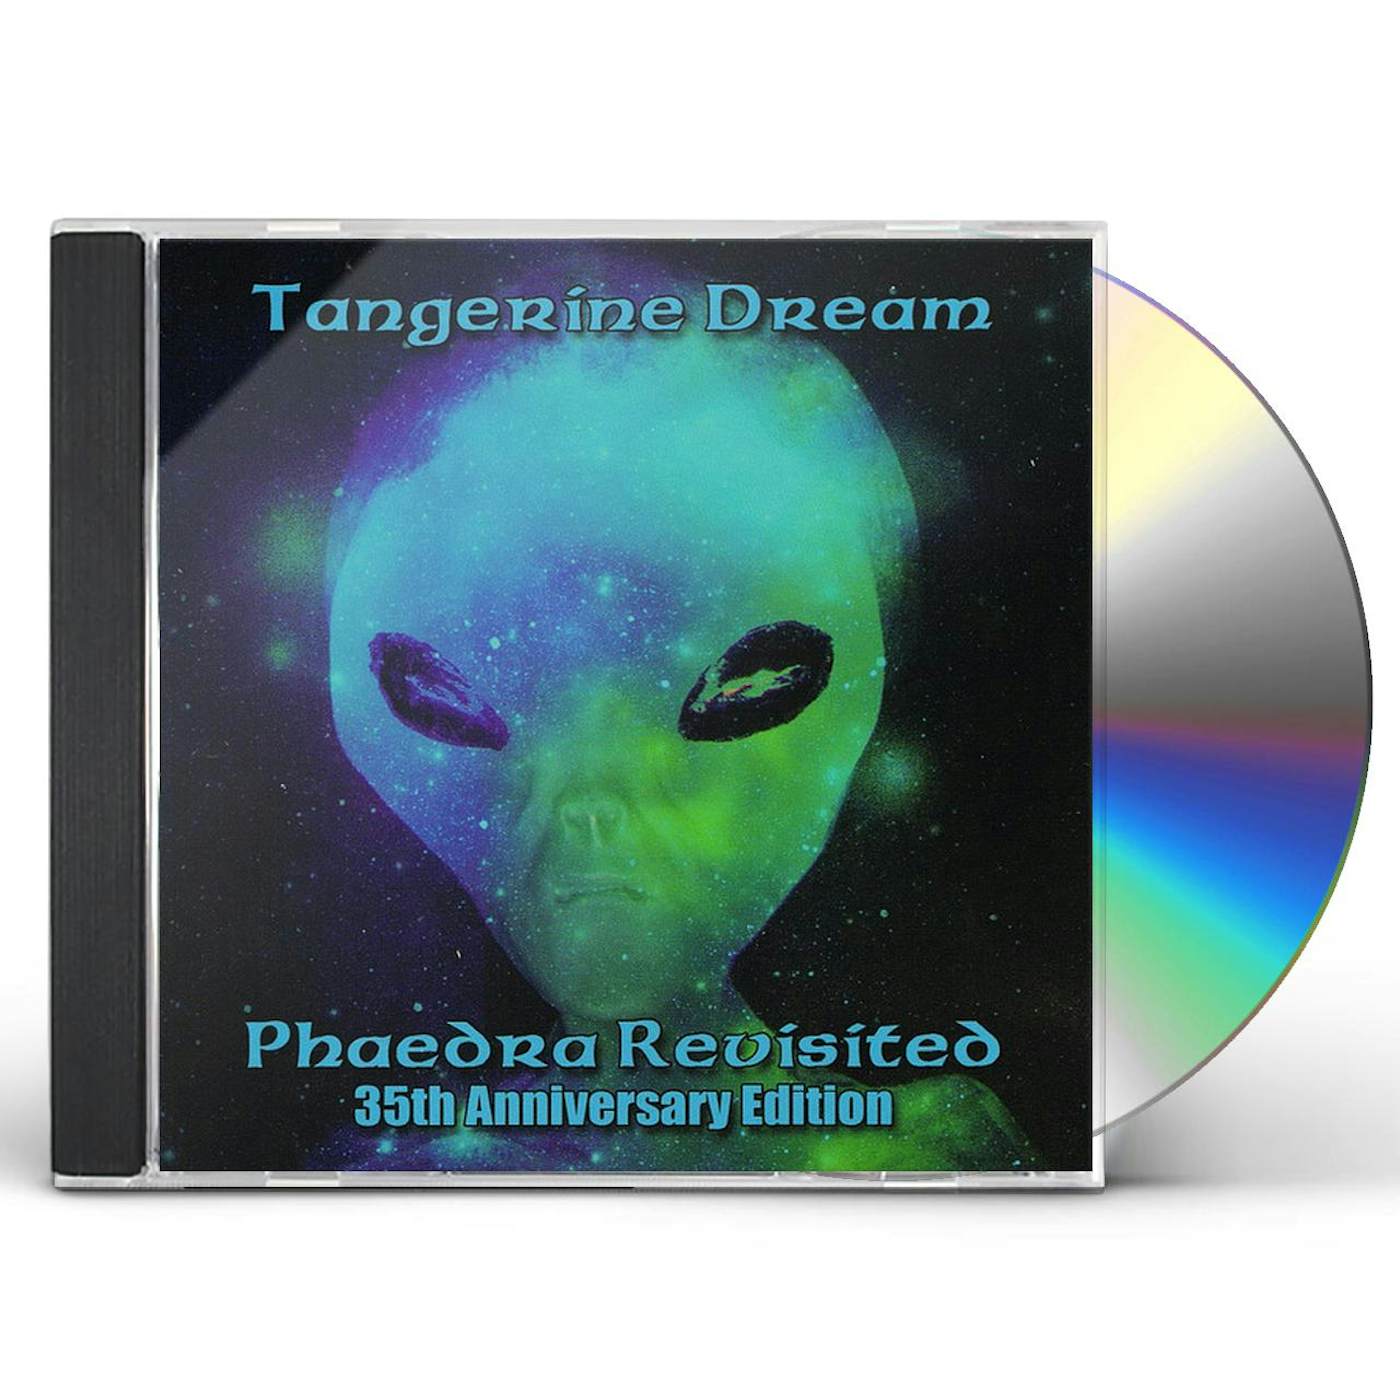 Tangerine Dream PHAEDRA REVISITED: 35TH ANNIVERSARY EDITION CD